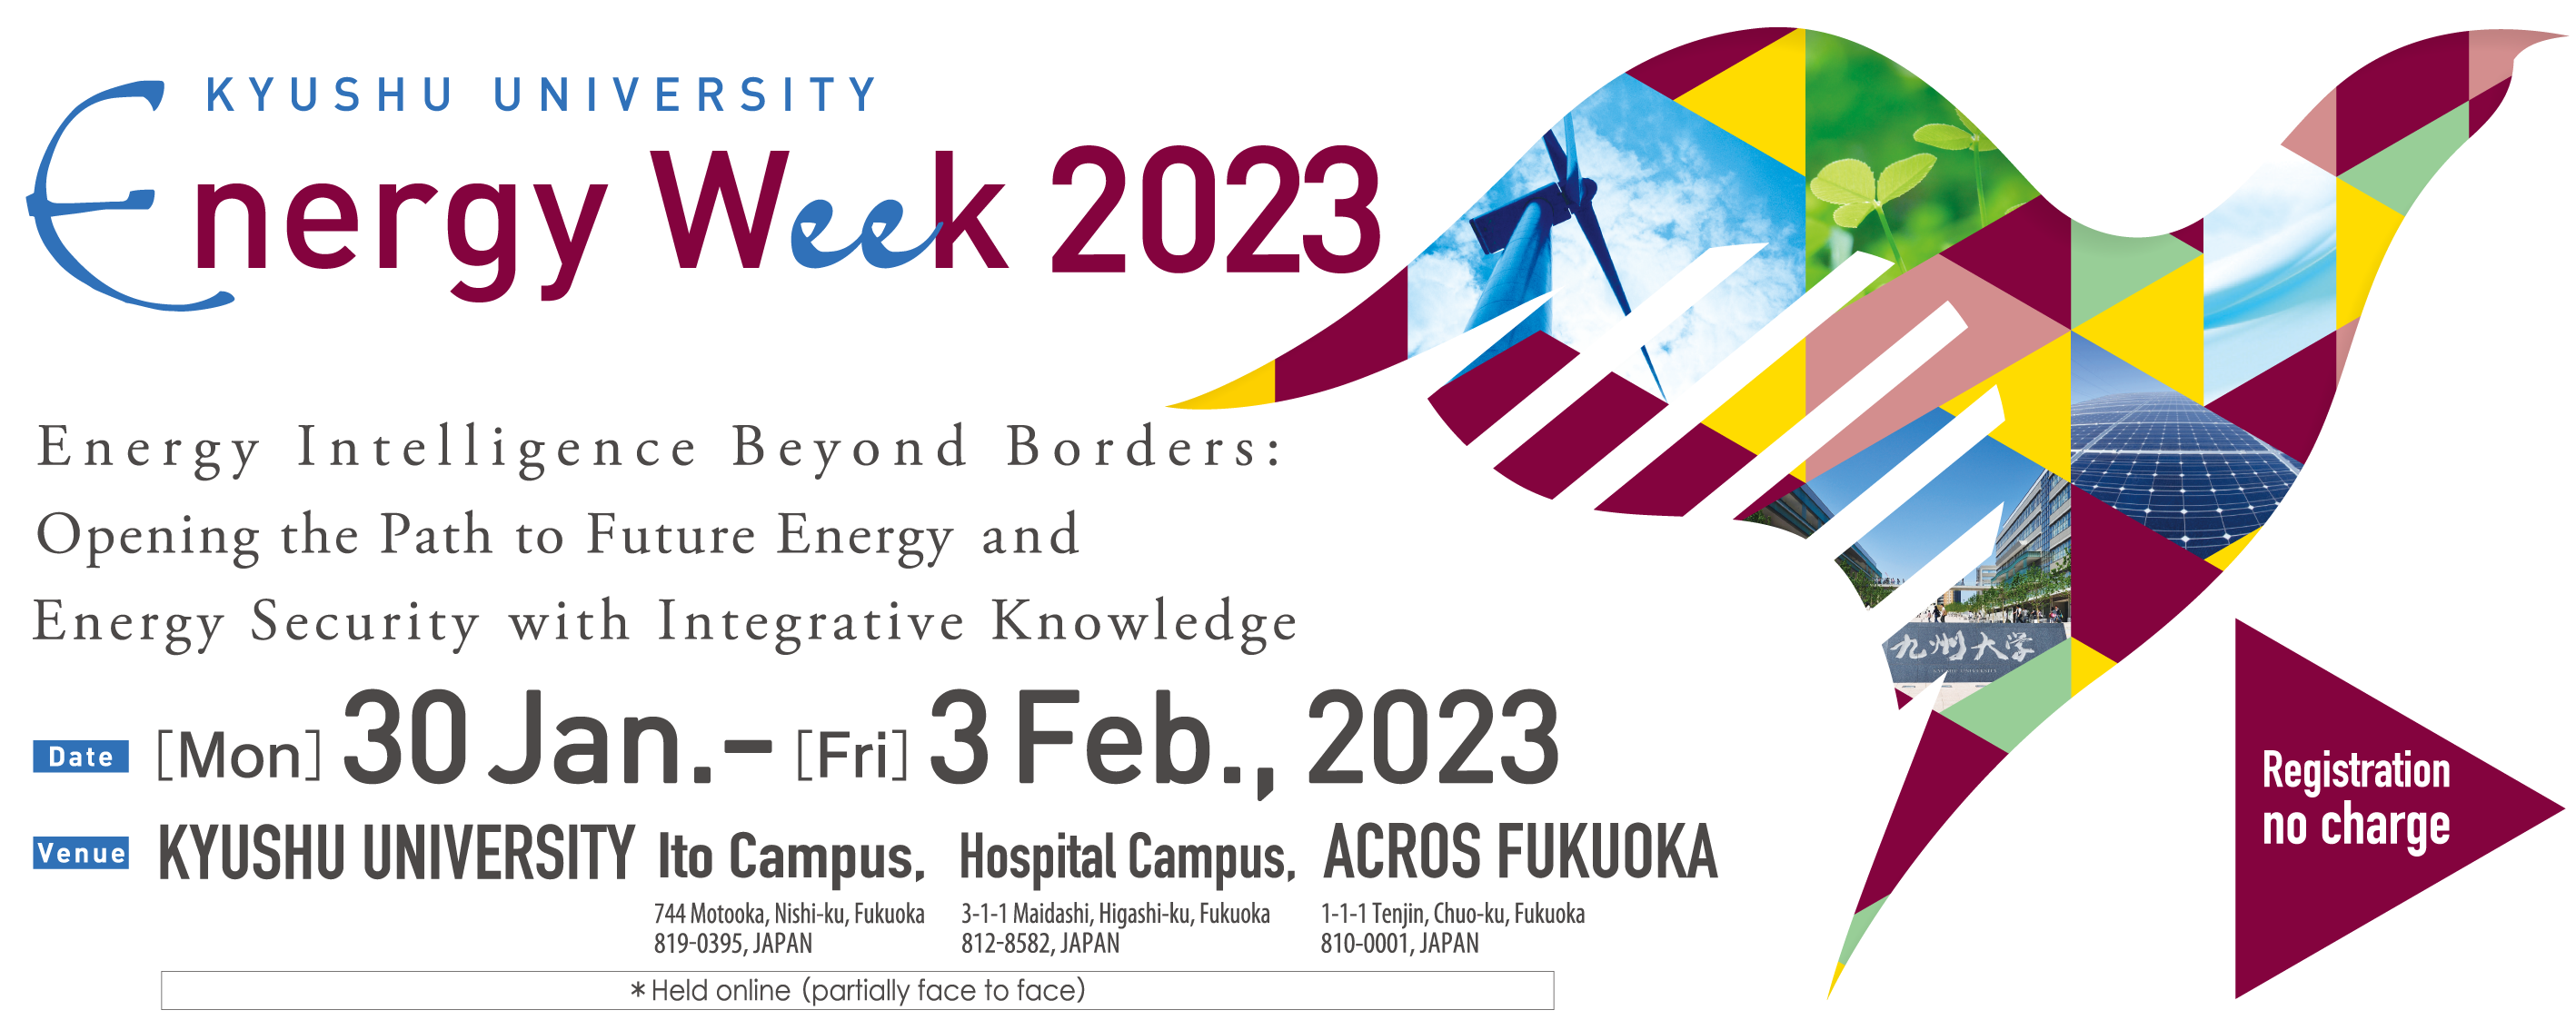 Kyushu University Energy Week 2023